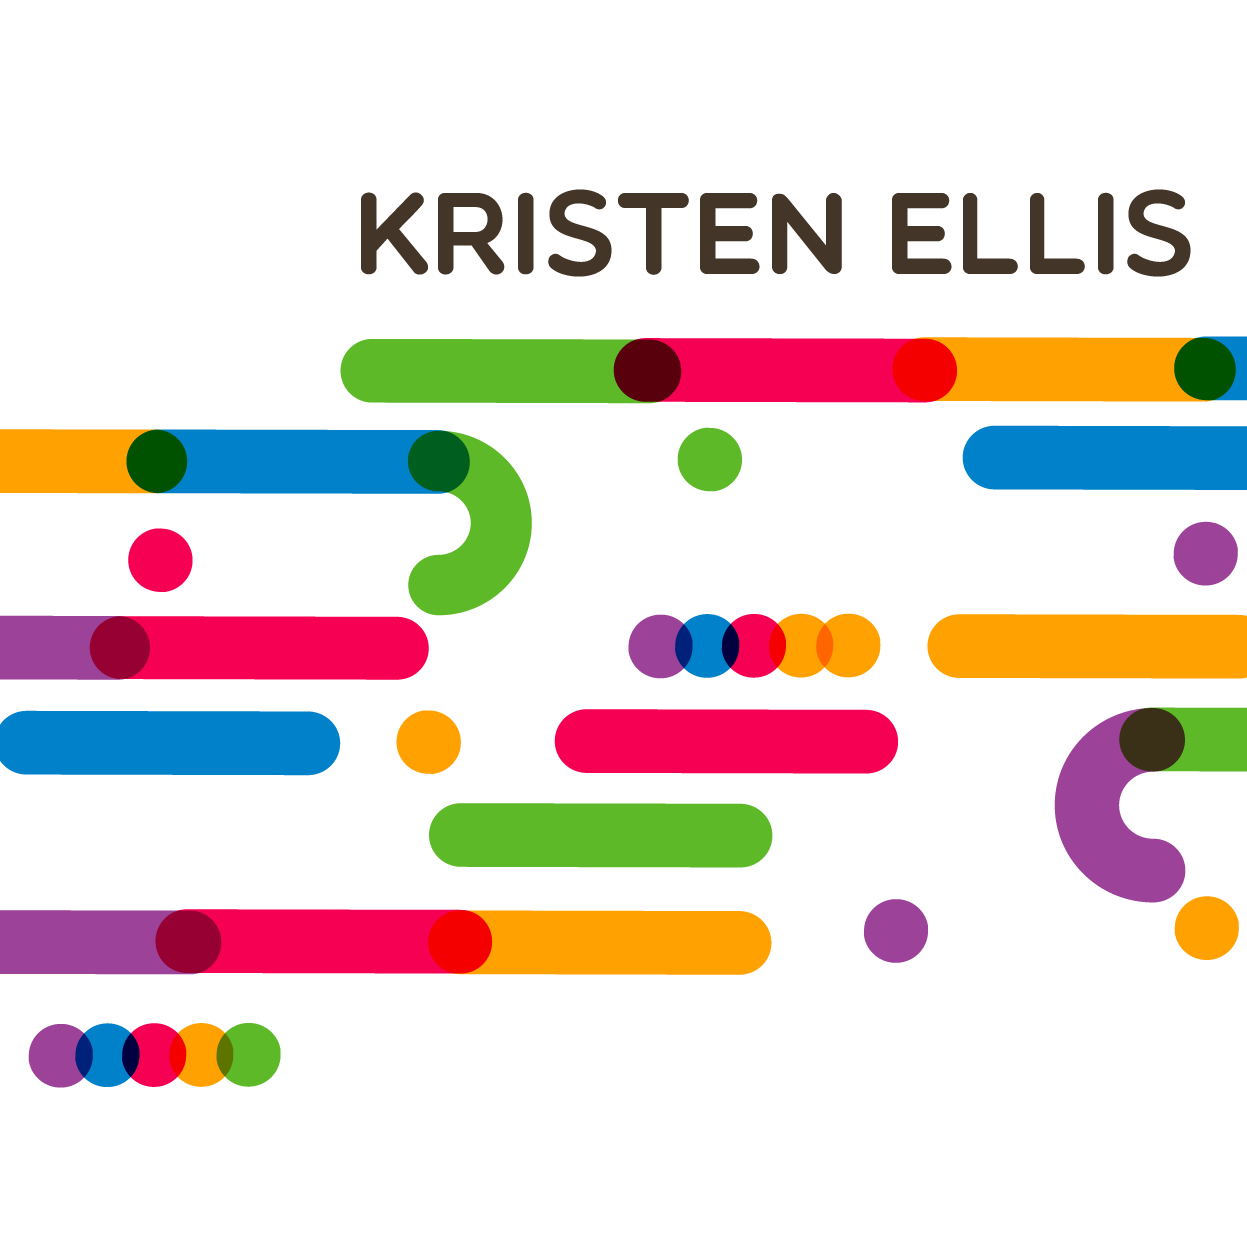 Kristen Ellis